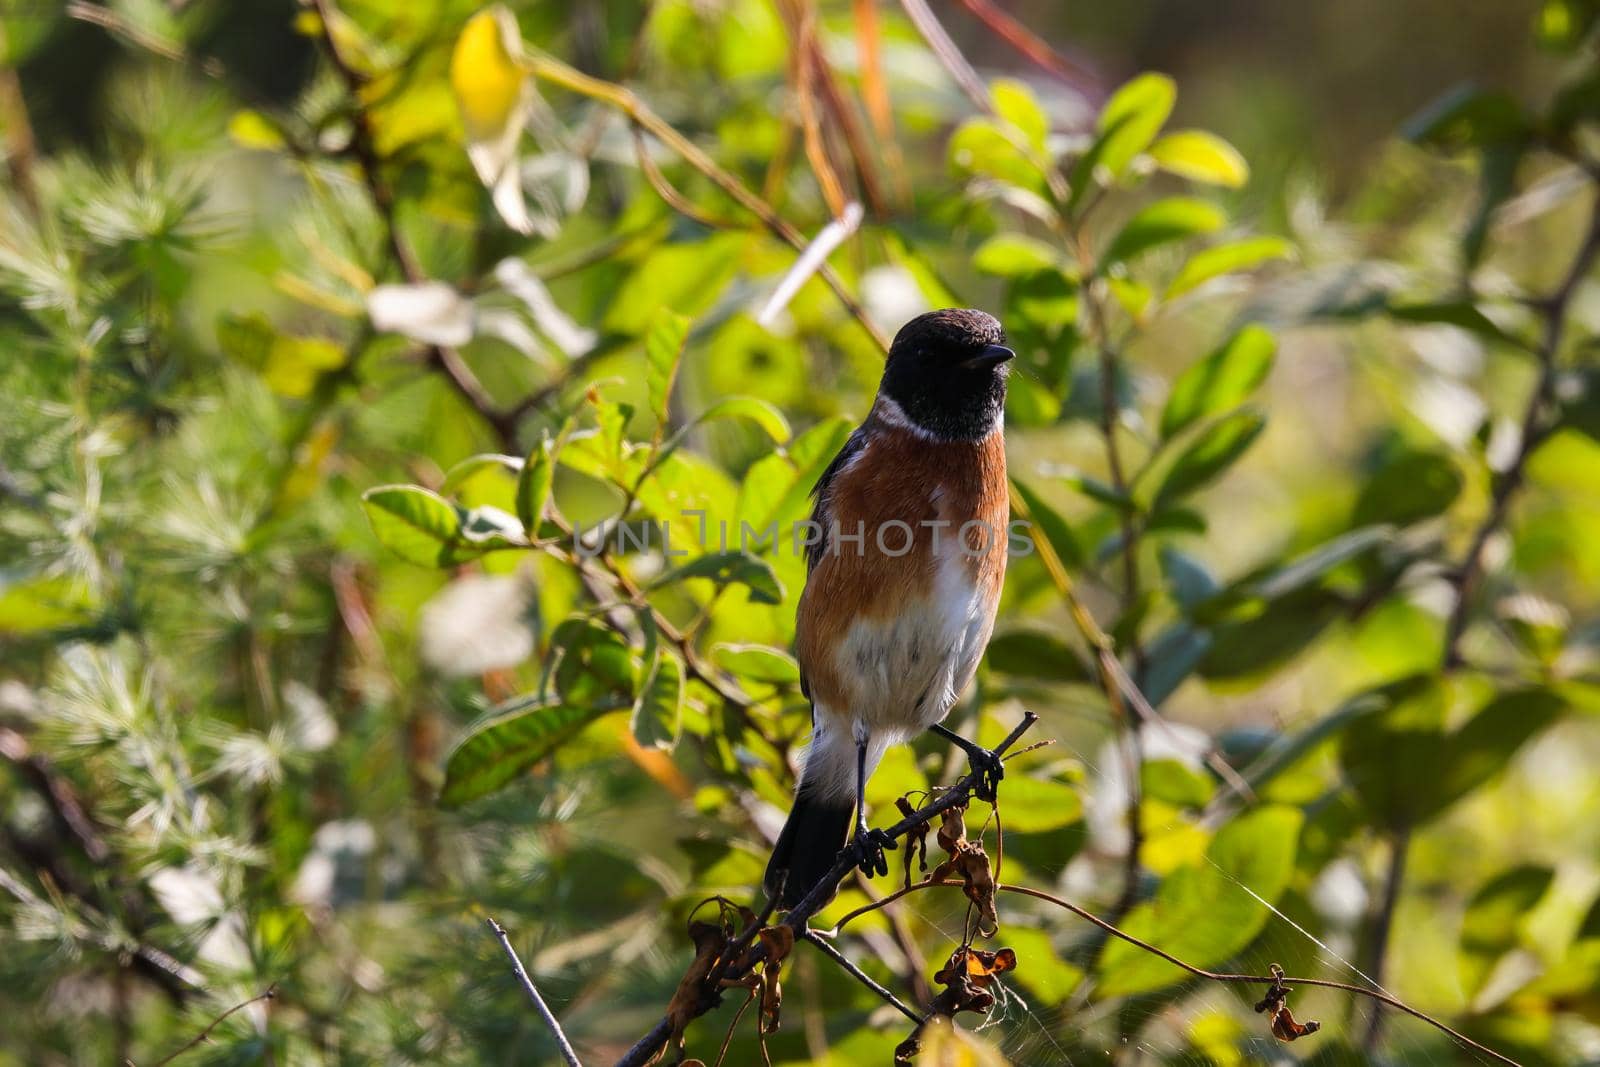 Stonechat Male Bird Perching On A Twig (Saxicola torquata) by jjvanginkel